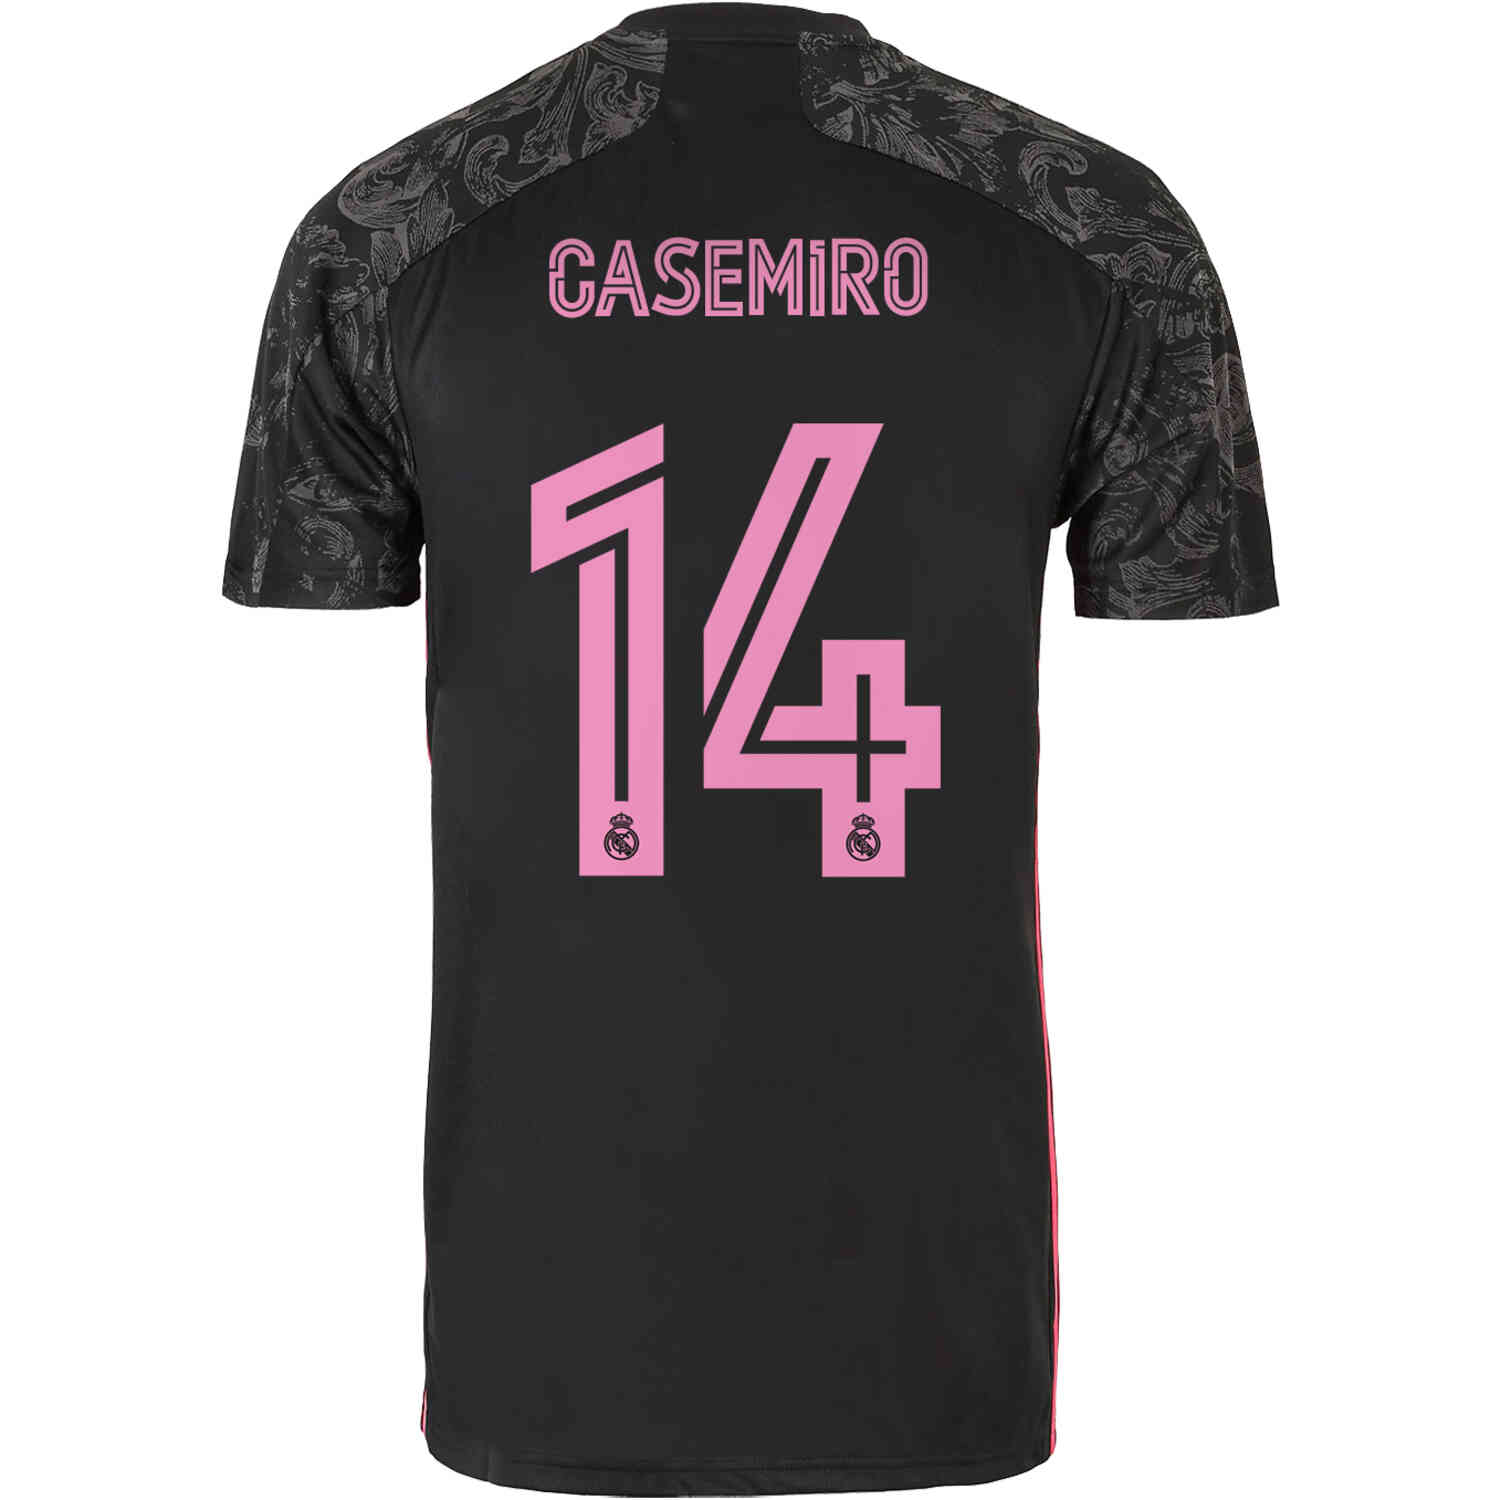 2020/21 Kids adidas Casemiro Real Madrid 3rd Jersey - SoccerPro